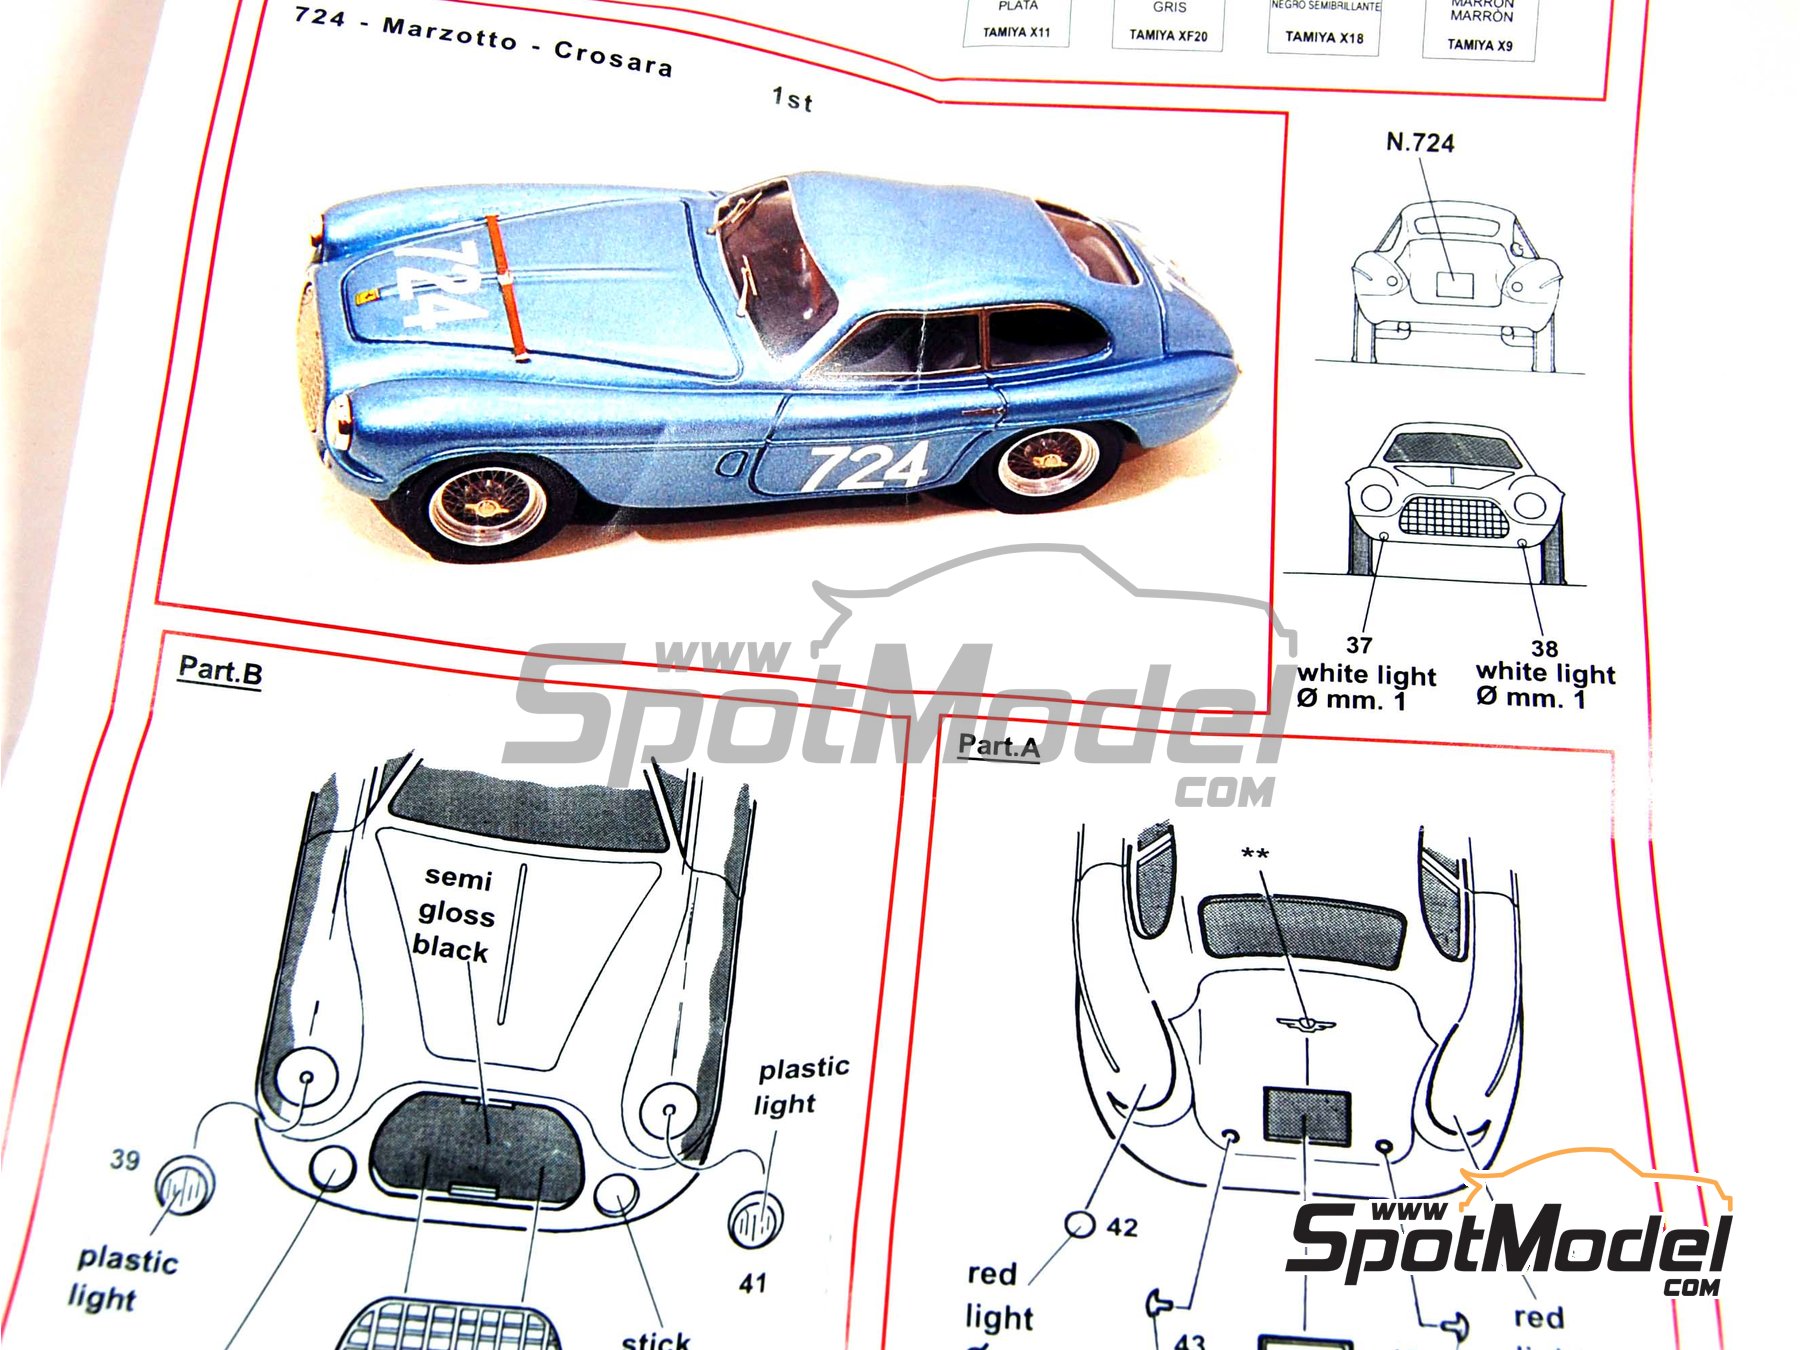 Tameo Kits TMK034: Car scale model kit 1/43 scale - Ferrari 195 S